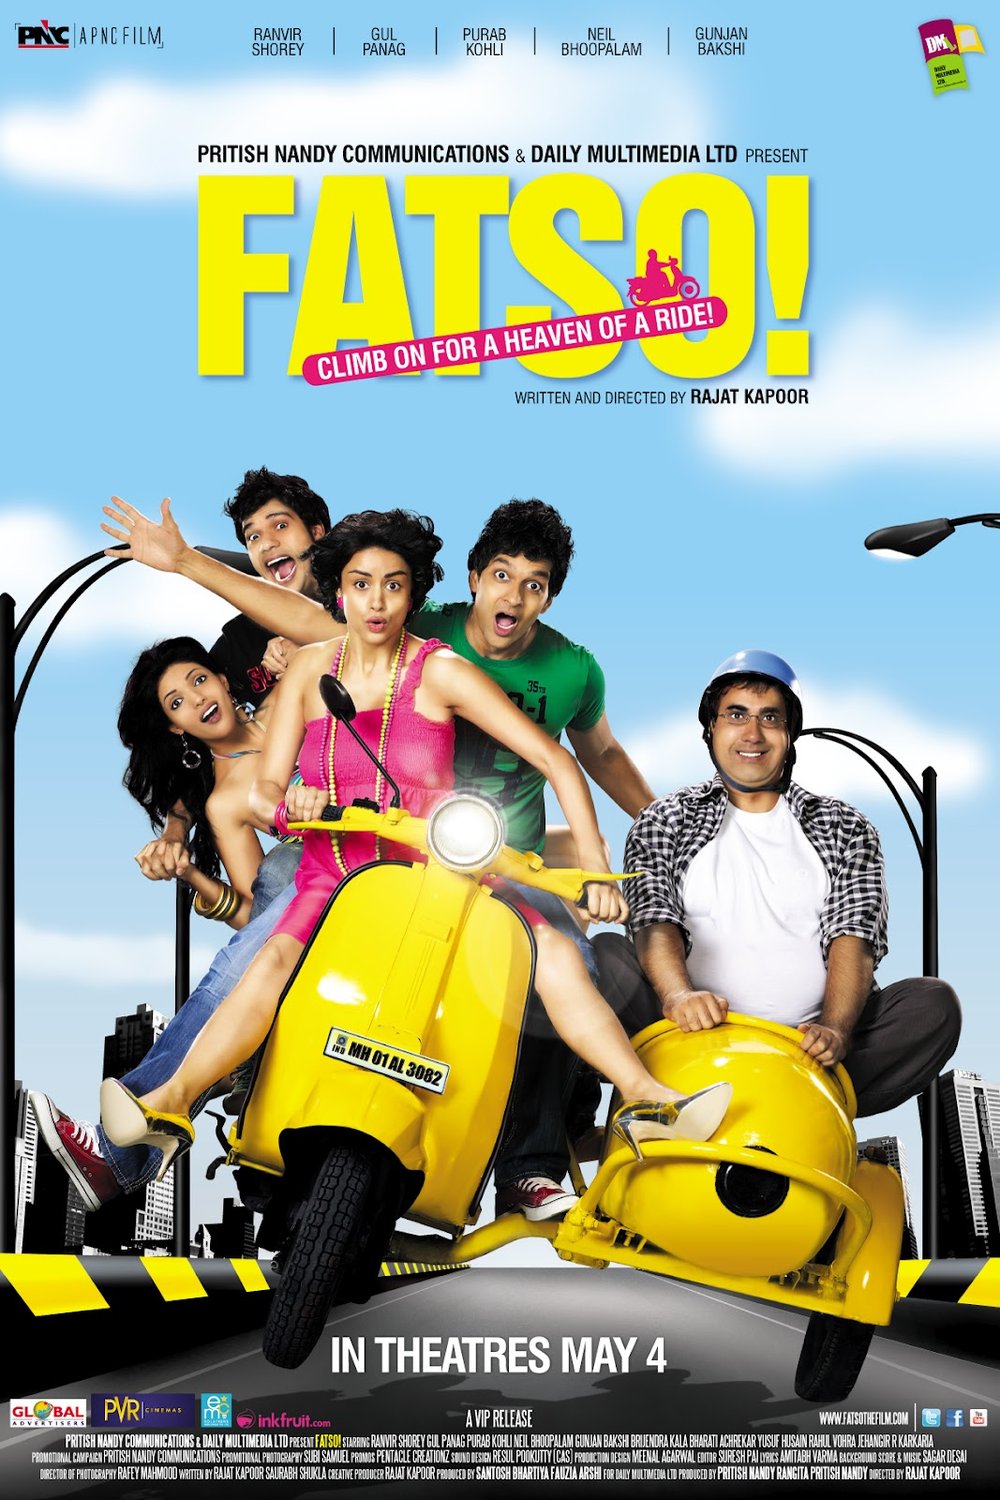 Hindi poster of the movie Fatso!